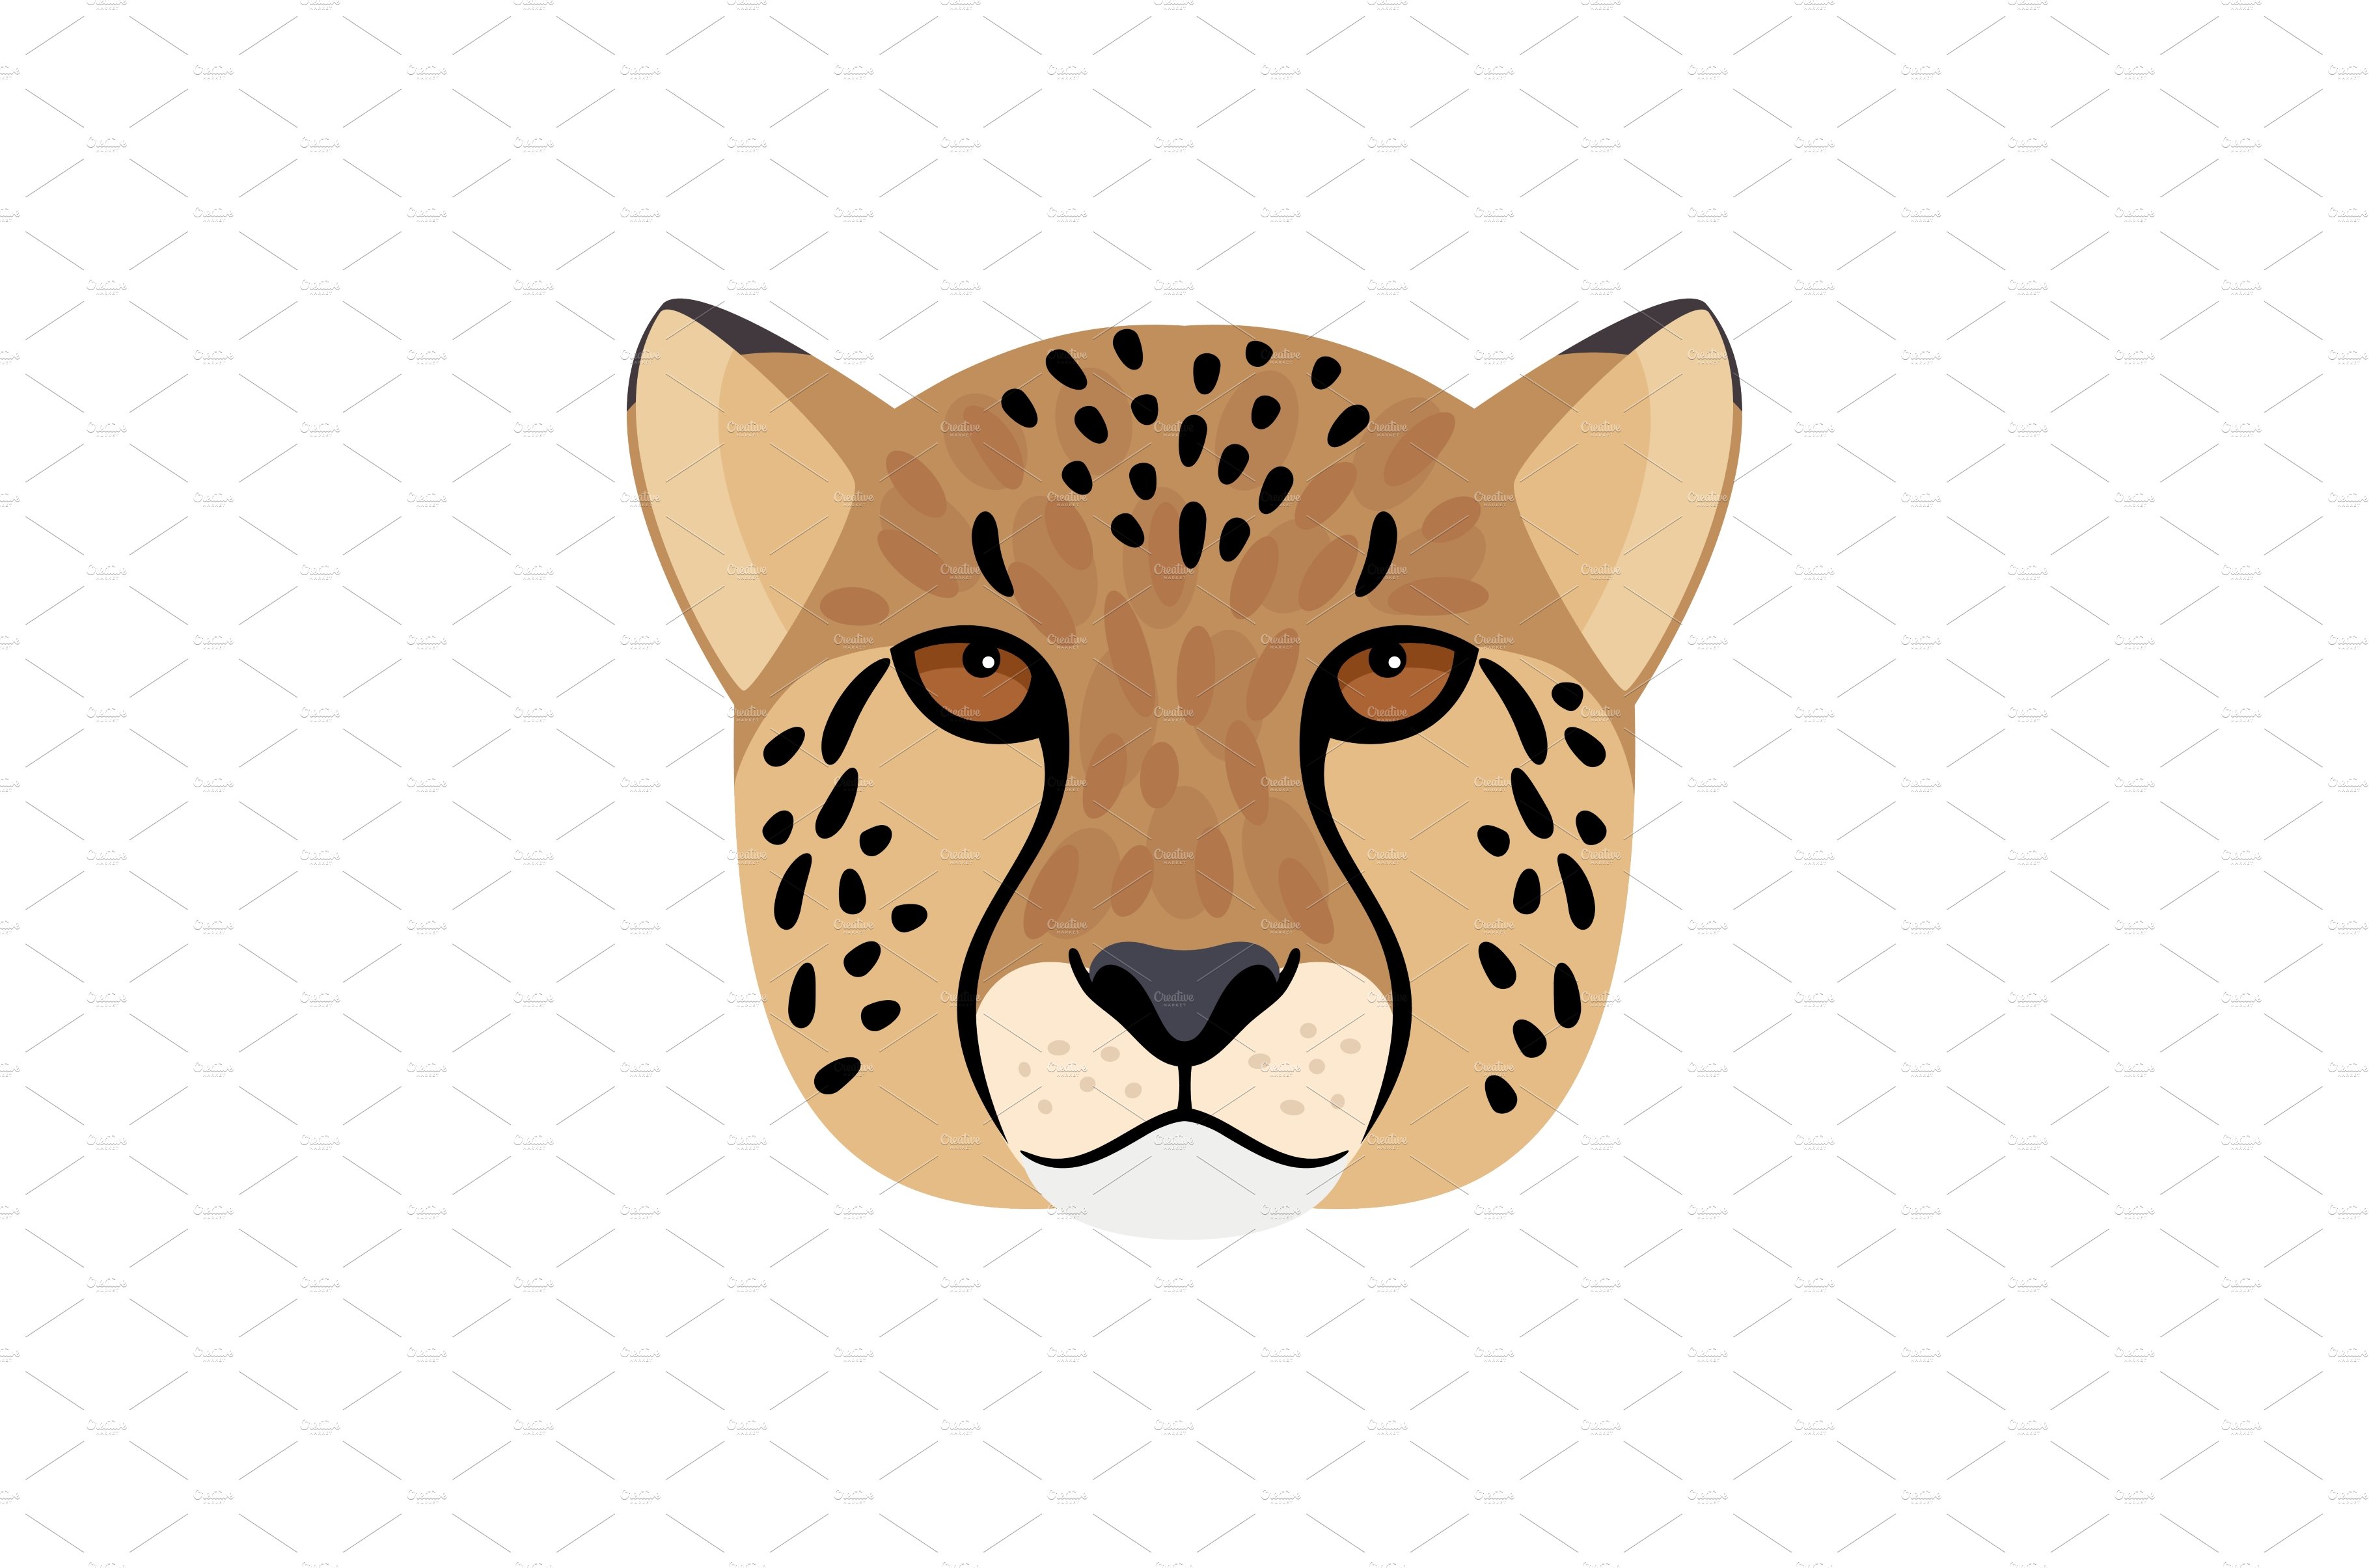 Cheetah head icon cover image.